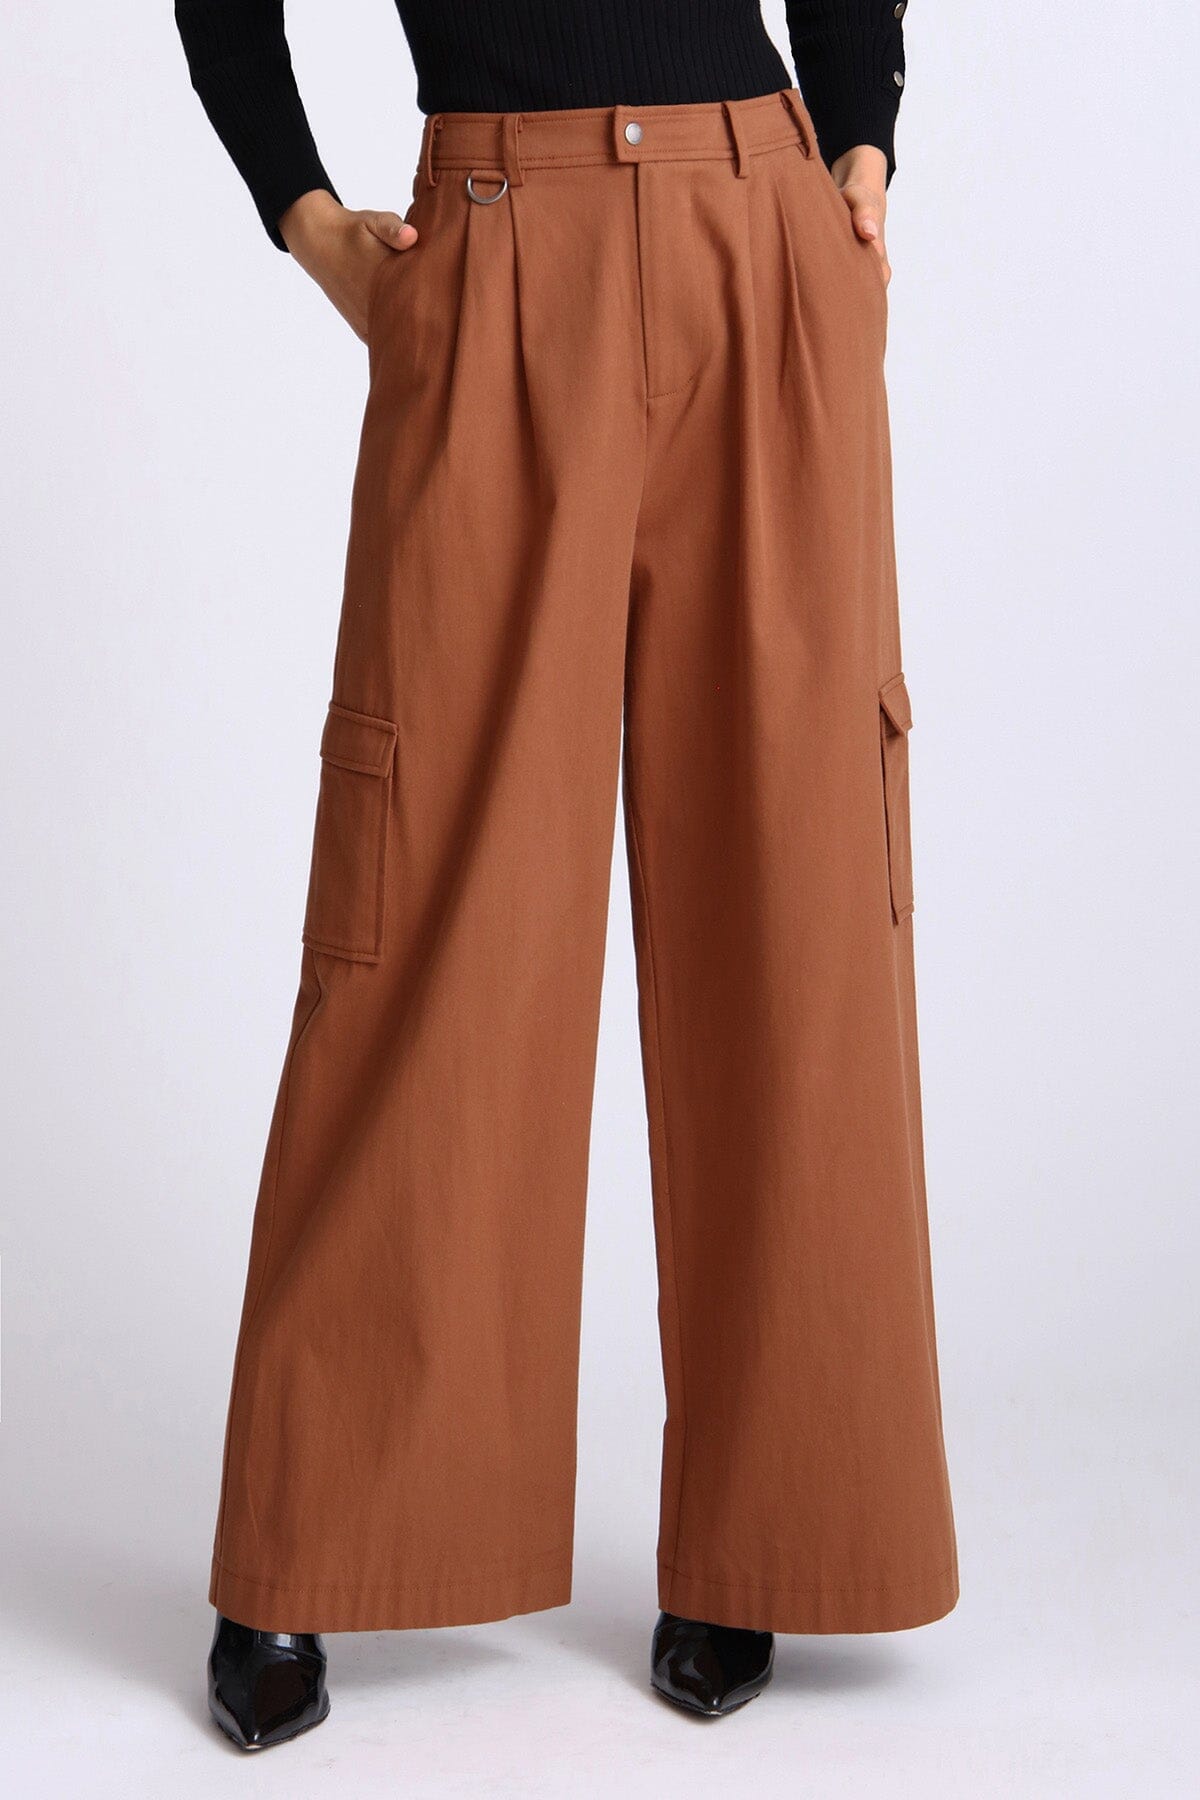 Brown cotton wide leg high waist cargo pant - figure flattering fall fashion pants for women